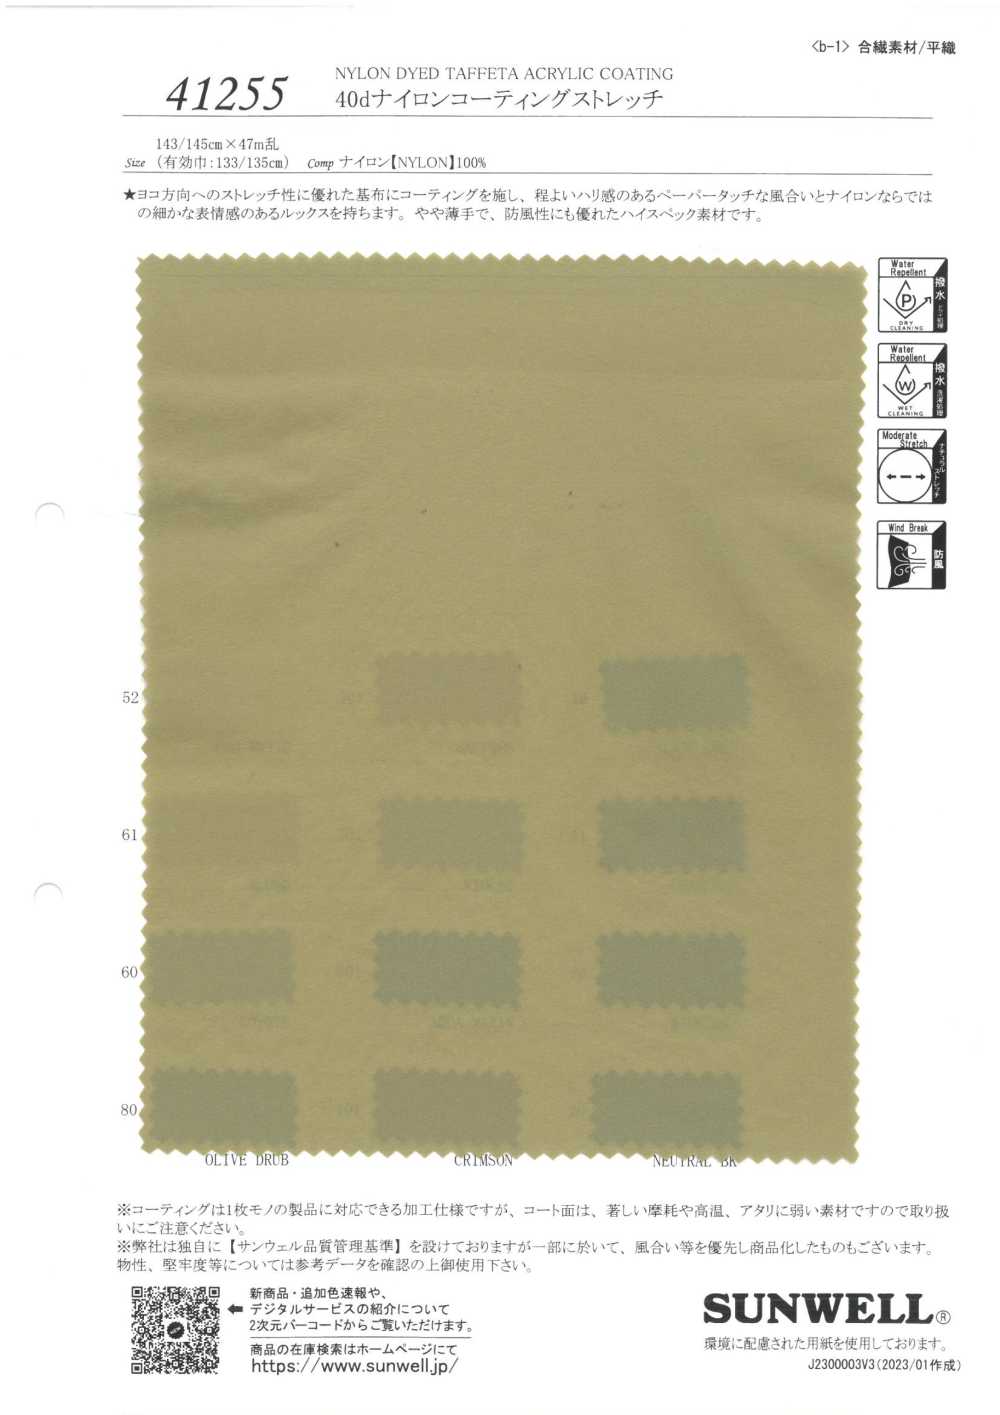 41255 40d Nylon Coated Stretch[Textile / Fabric] SUNWELL